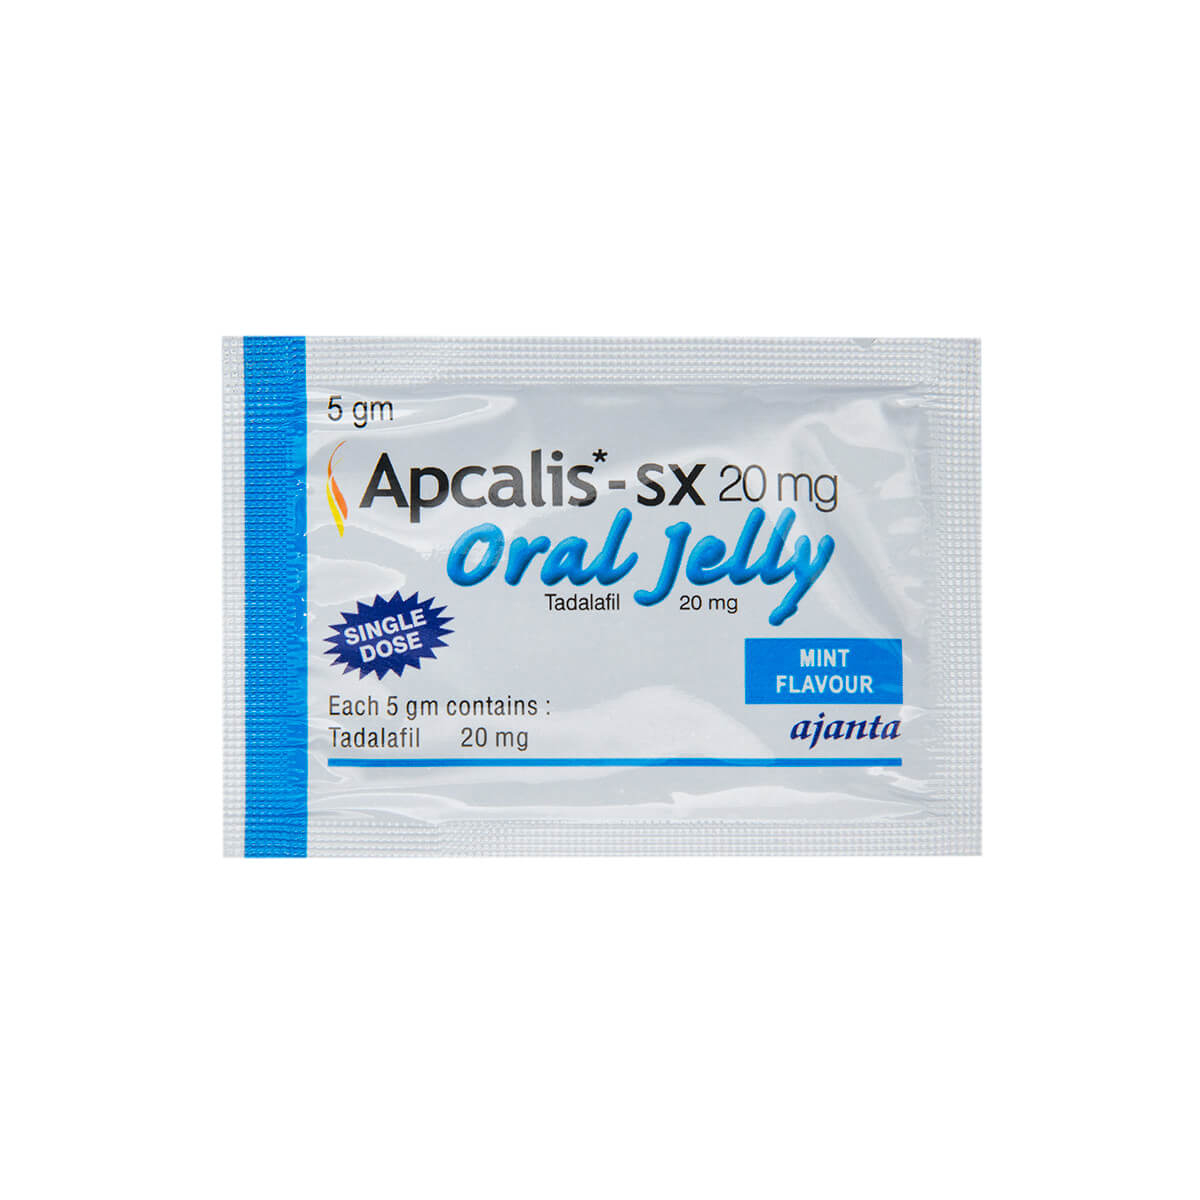 Apcalis-sx oral jelly 20mg